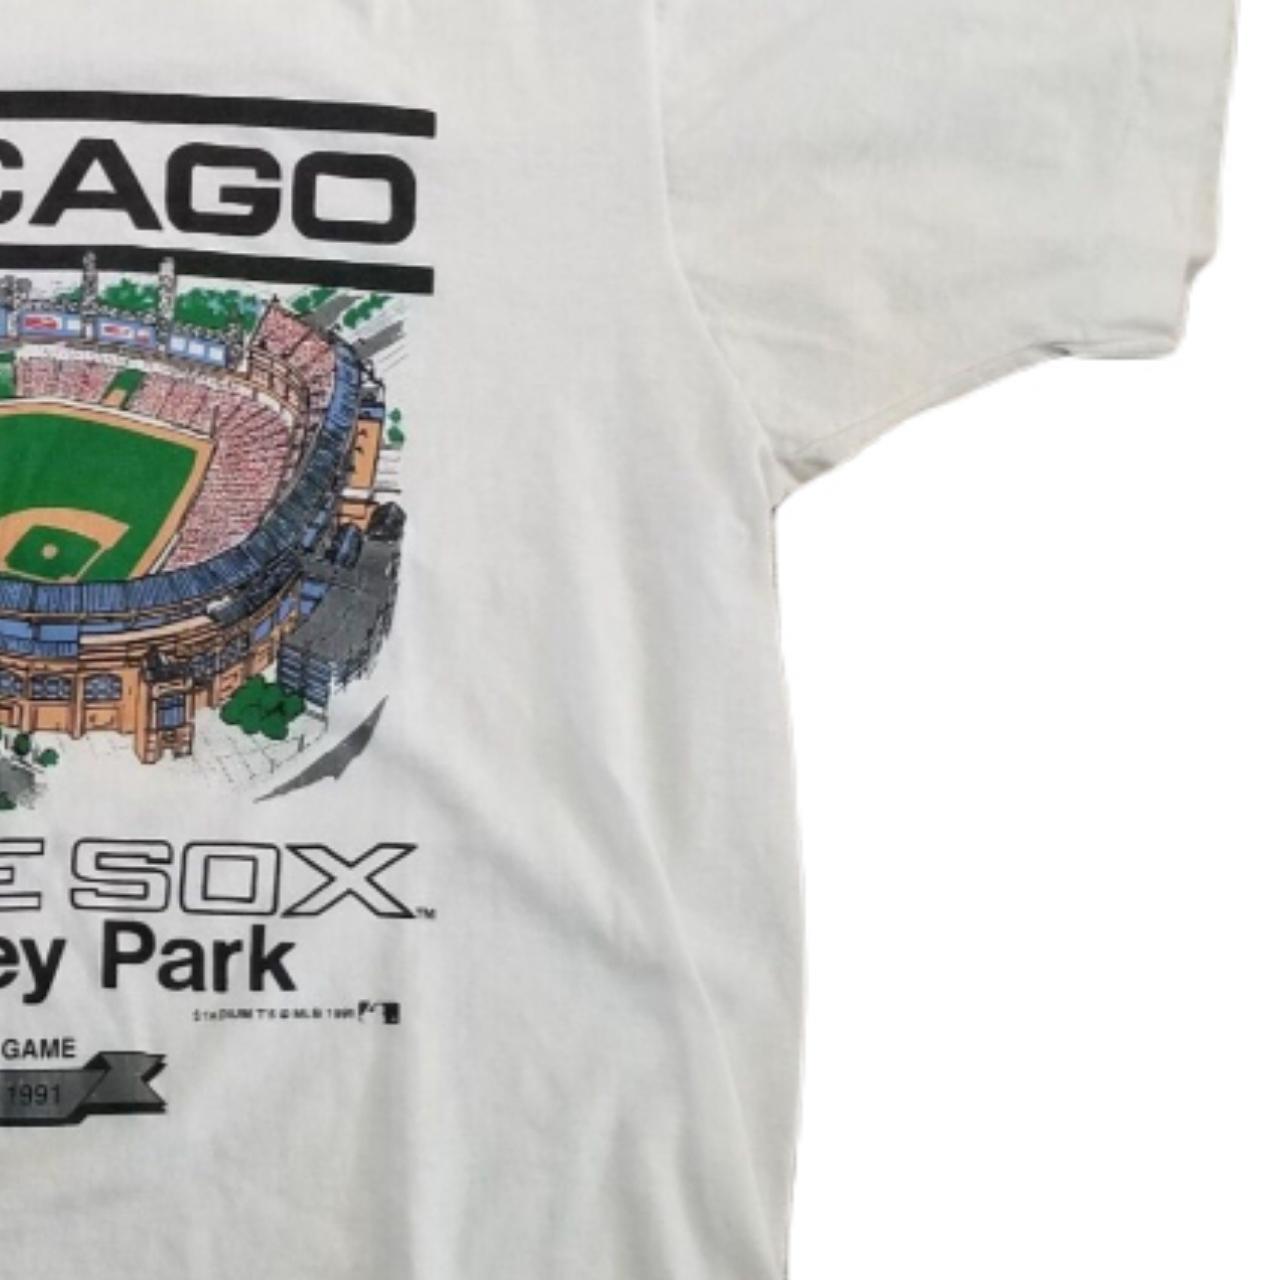 Vintage Comiskey park White Sox t-shirt. Jerzees - Depop